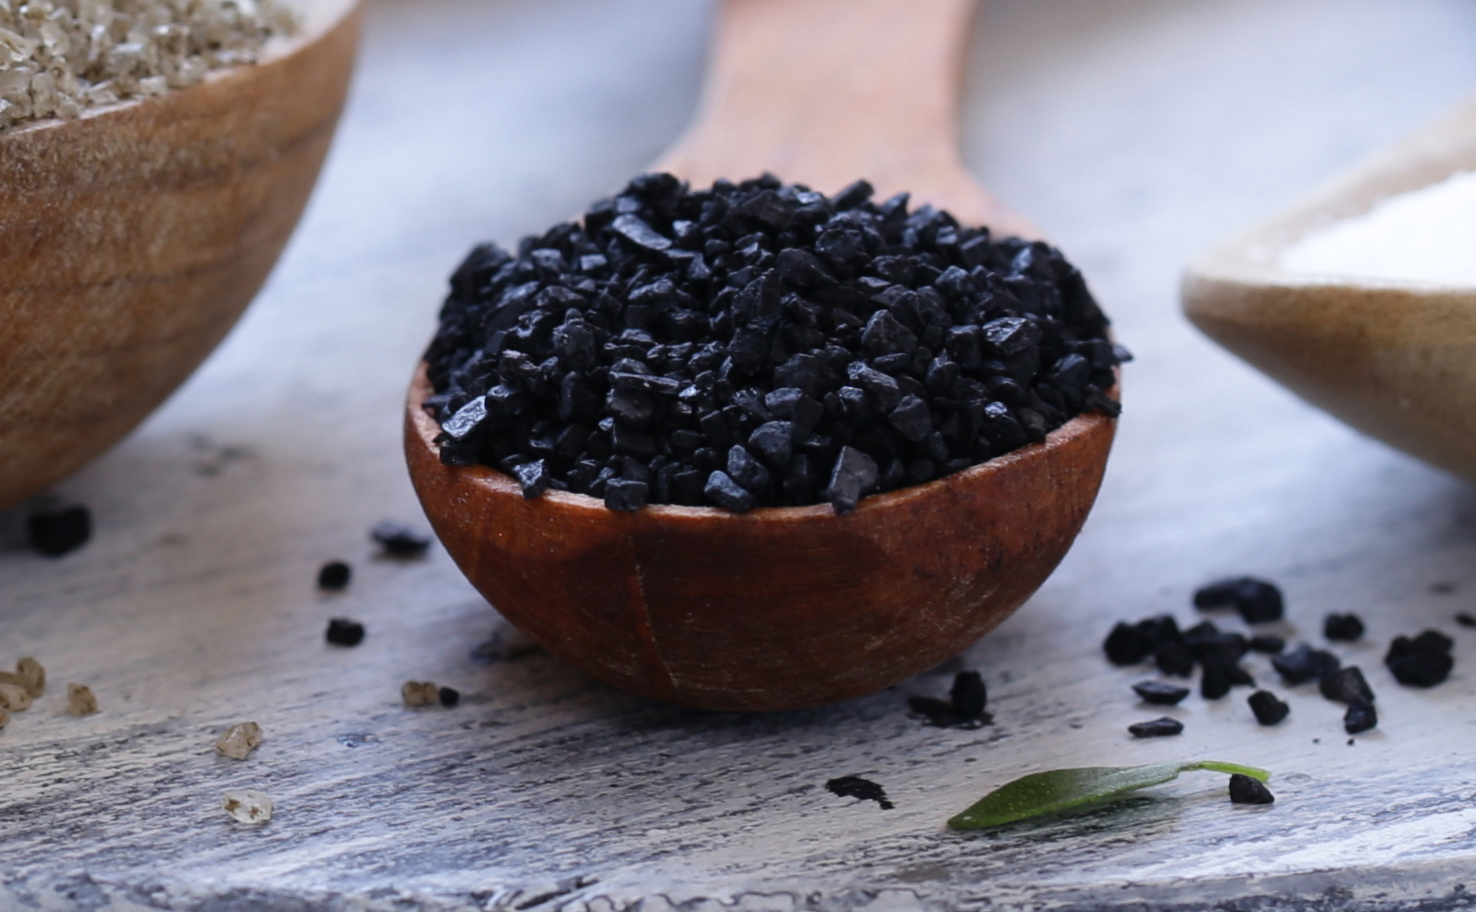 What is Black Salt, Buy Black Salt, black salt uses, black salt taste, using black salt, use of black salt, black salt benefits